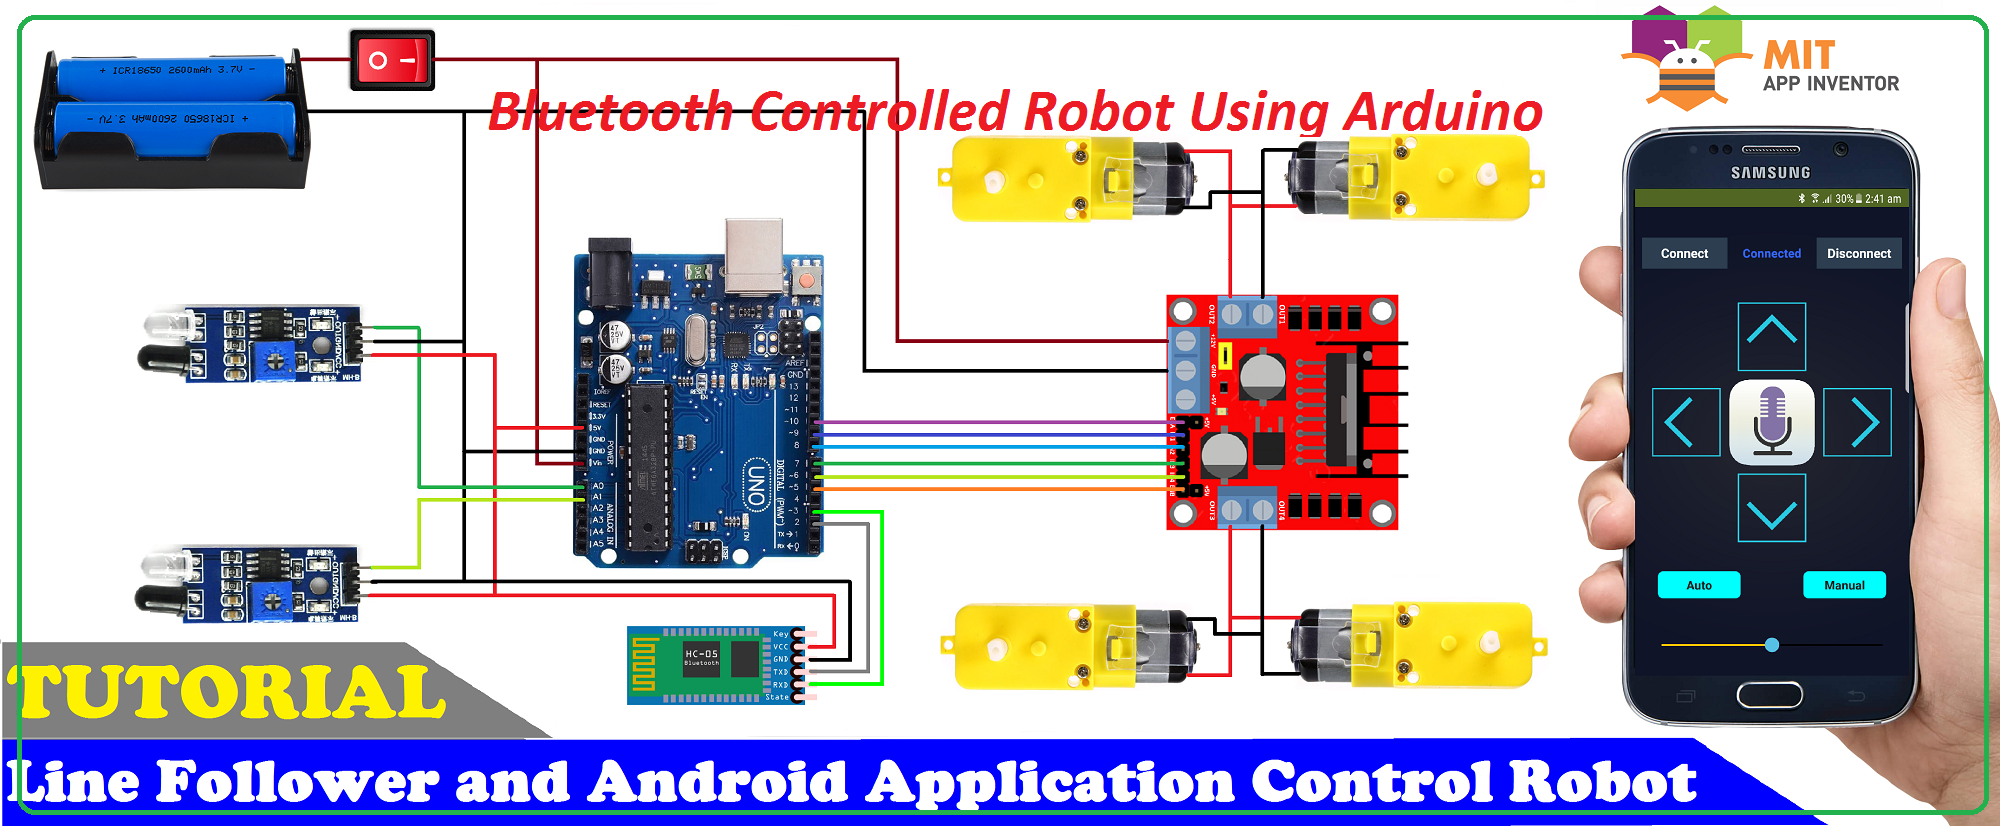 Bluetooth Controlled Robot Using Arduino